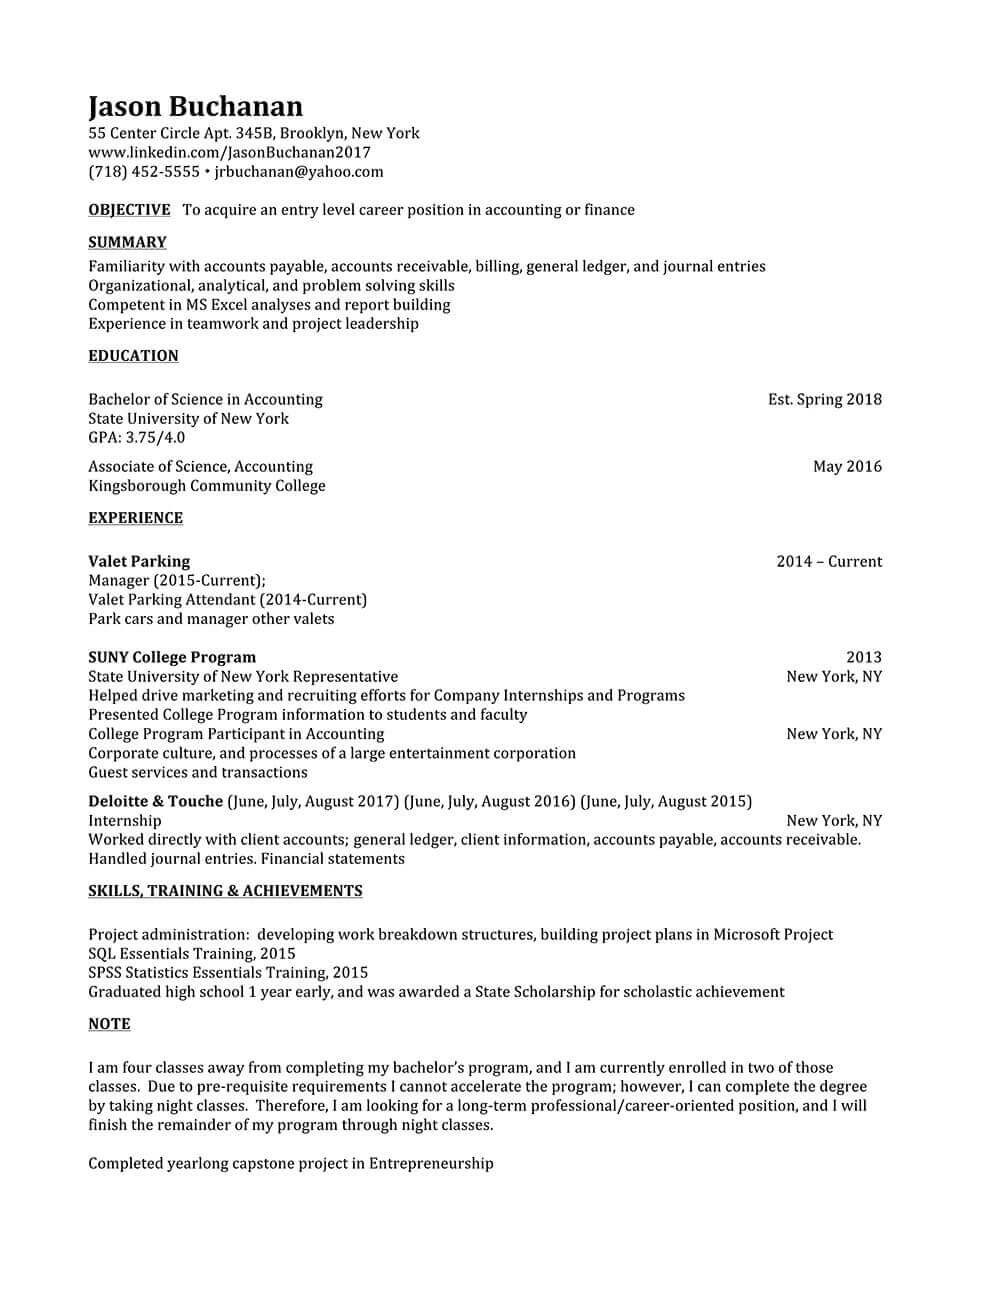 Sample Cover Letter for Resume Monster Professional Resume Writing Services Monster.com